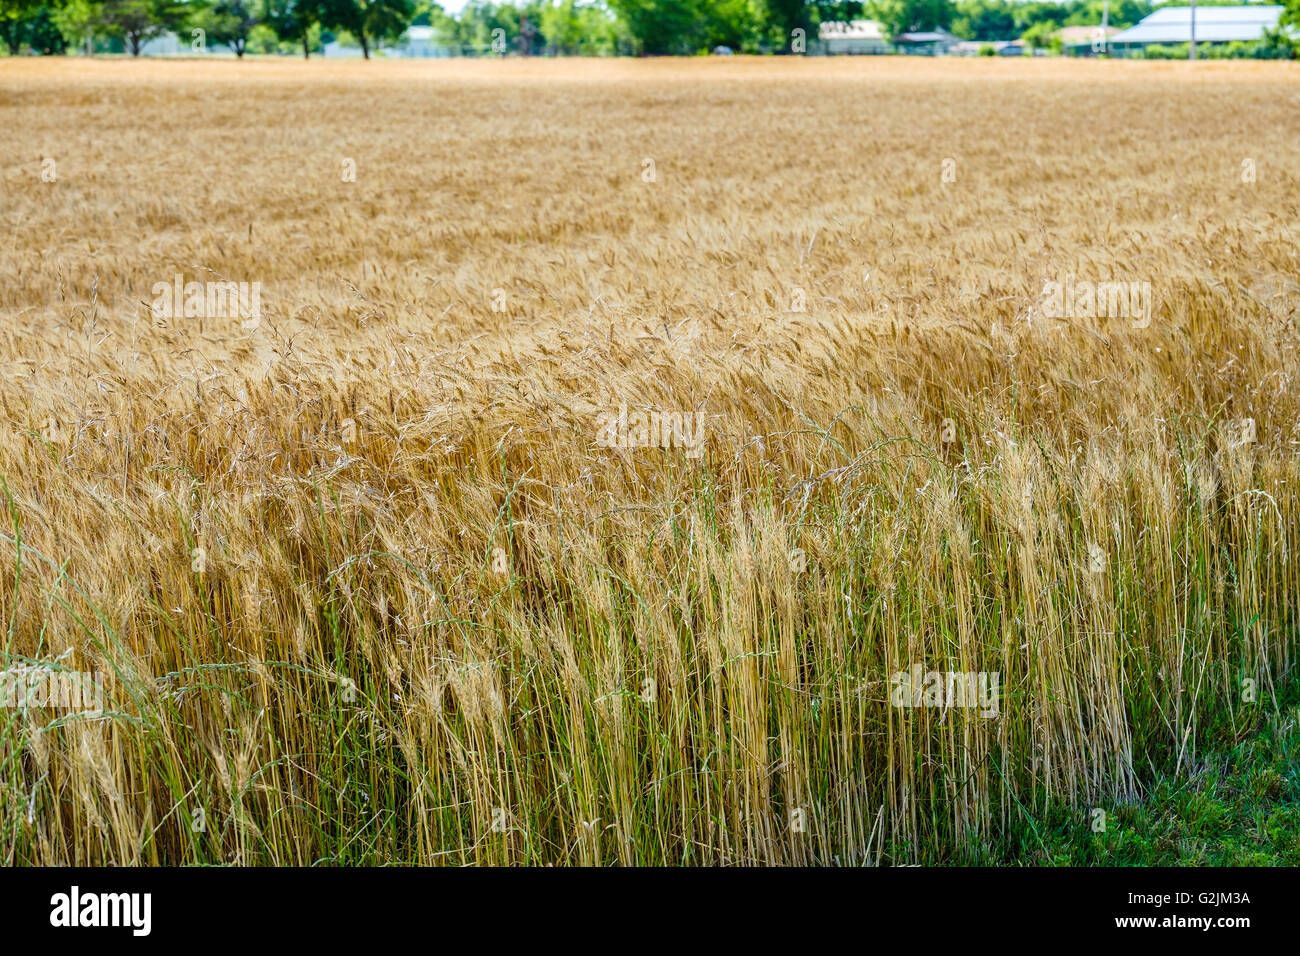 a-closeup-of-a-field-of-ripe-wheat-ready